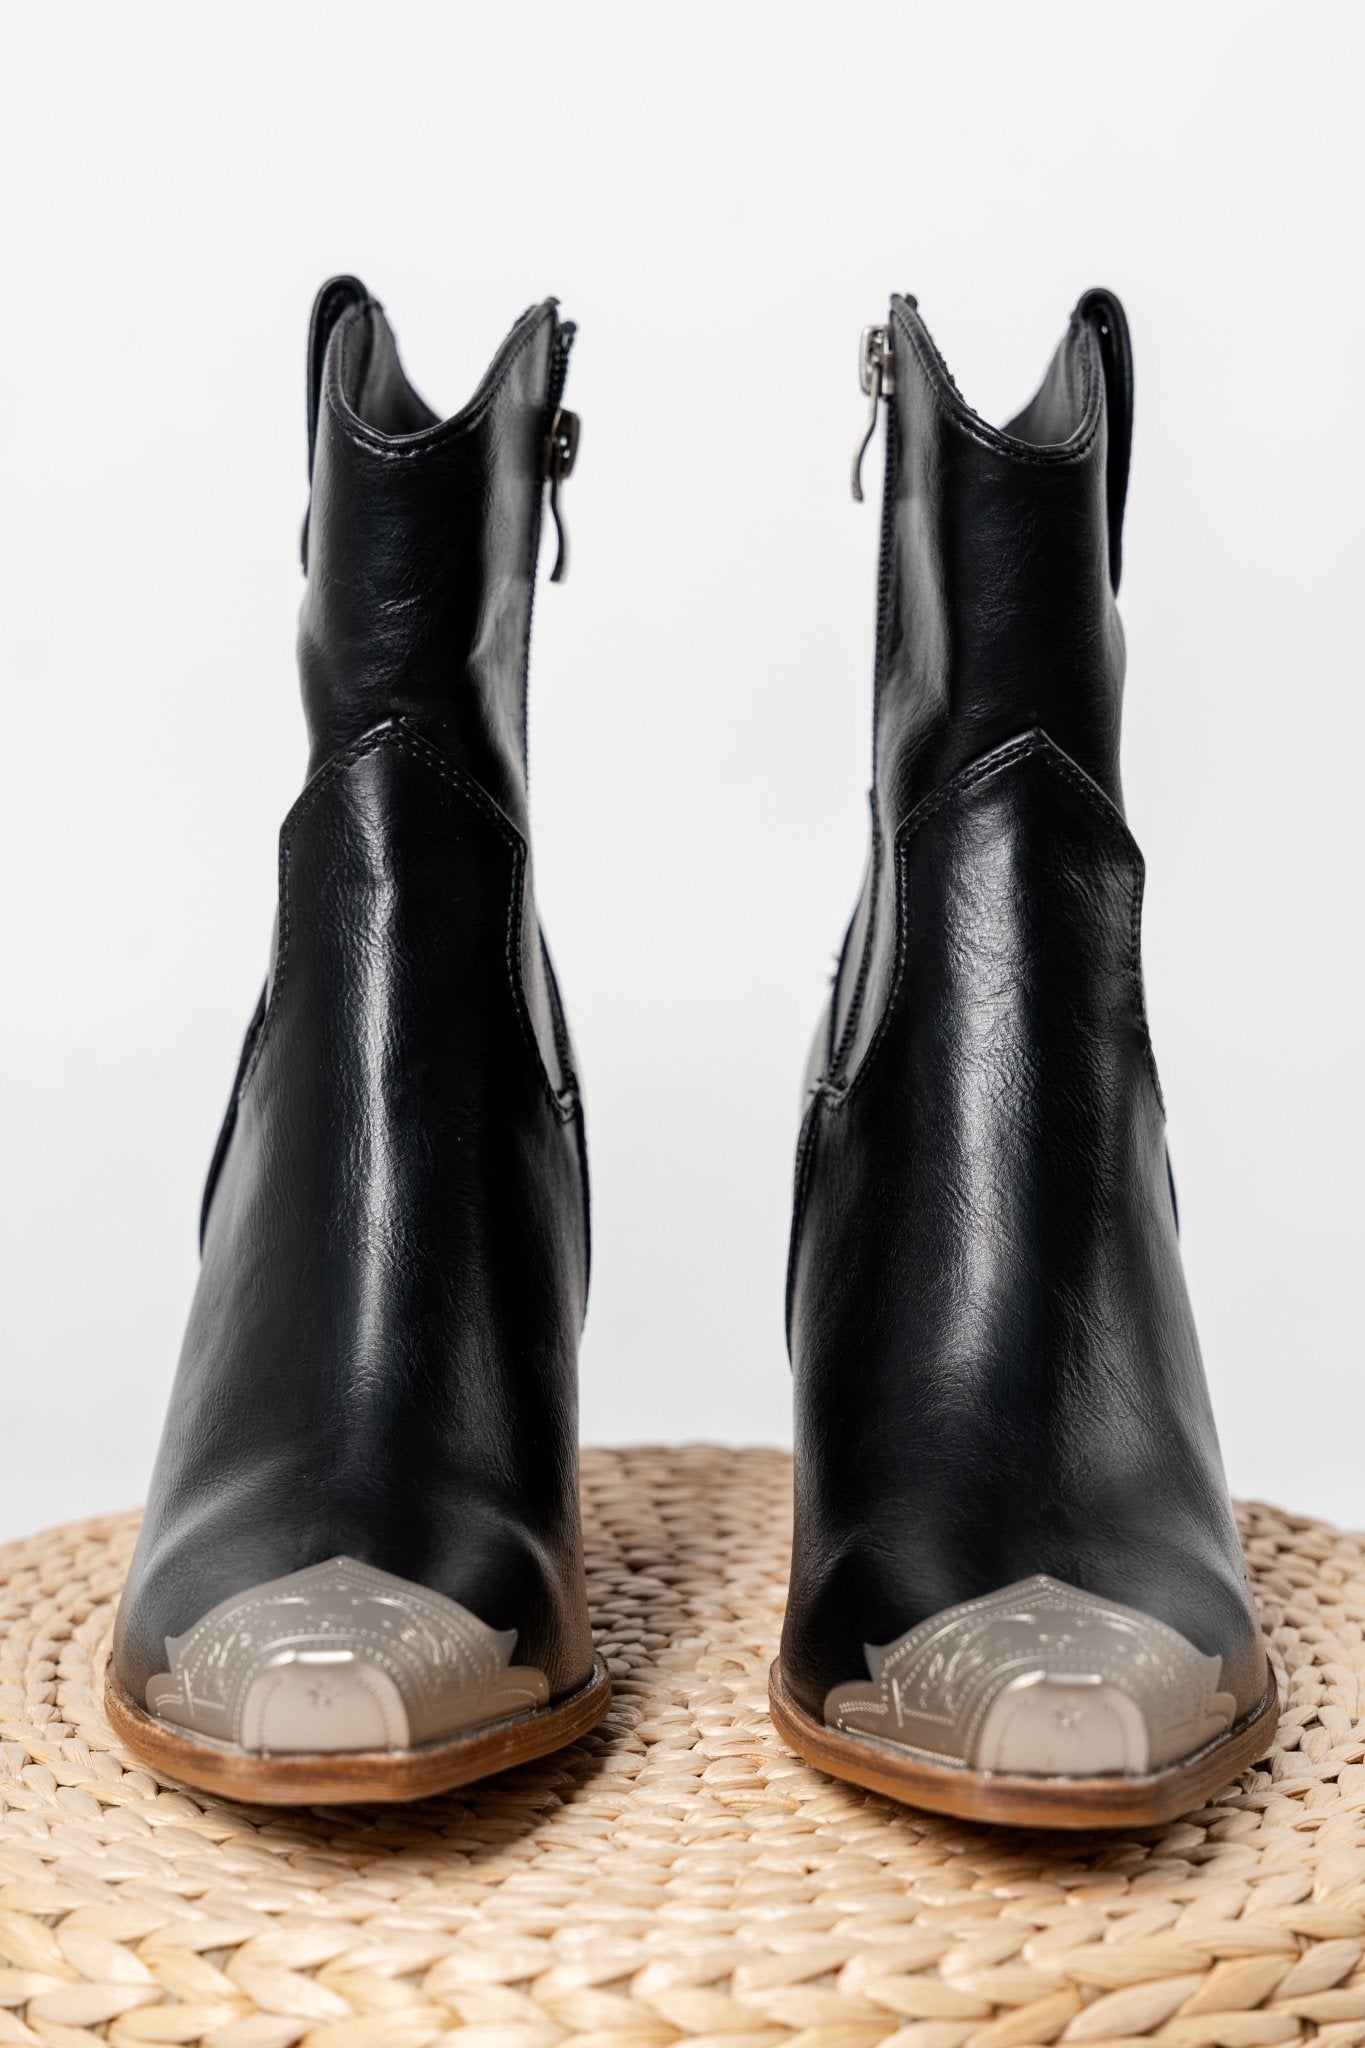 Dakota cowboy boot black - Trendy boots - Fashion Shoes at Lush Fashion Lounge Boutique in Oklahoma City